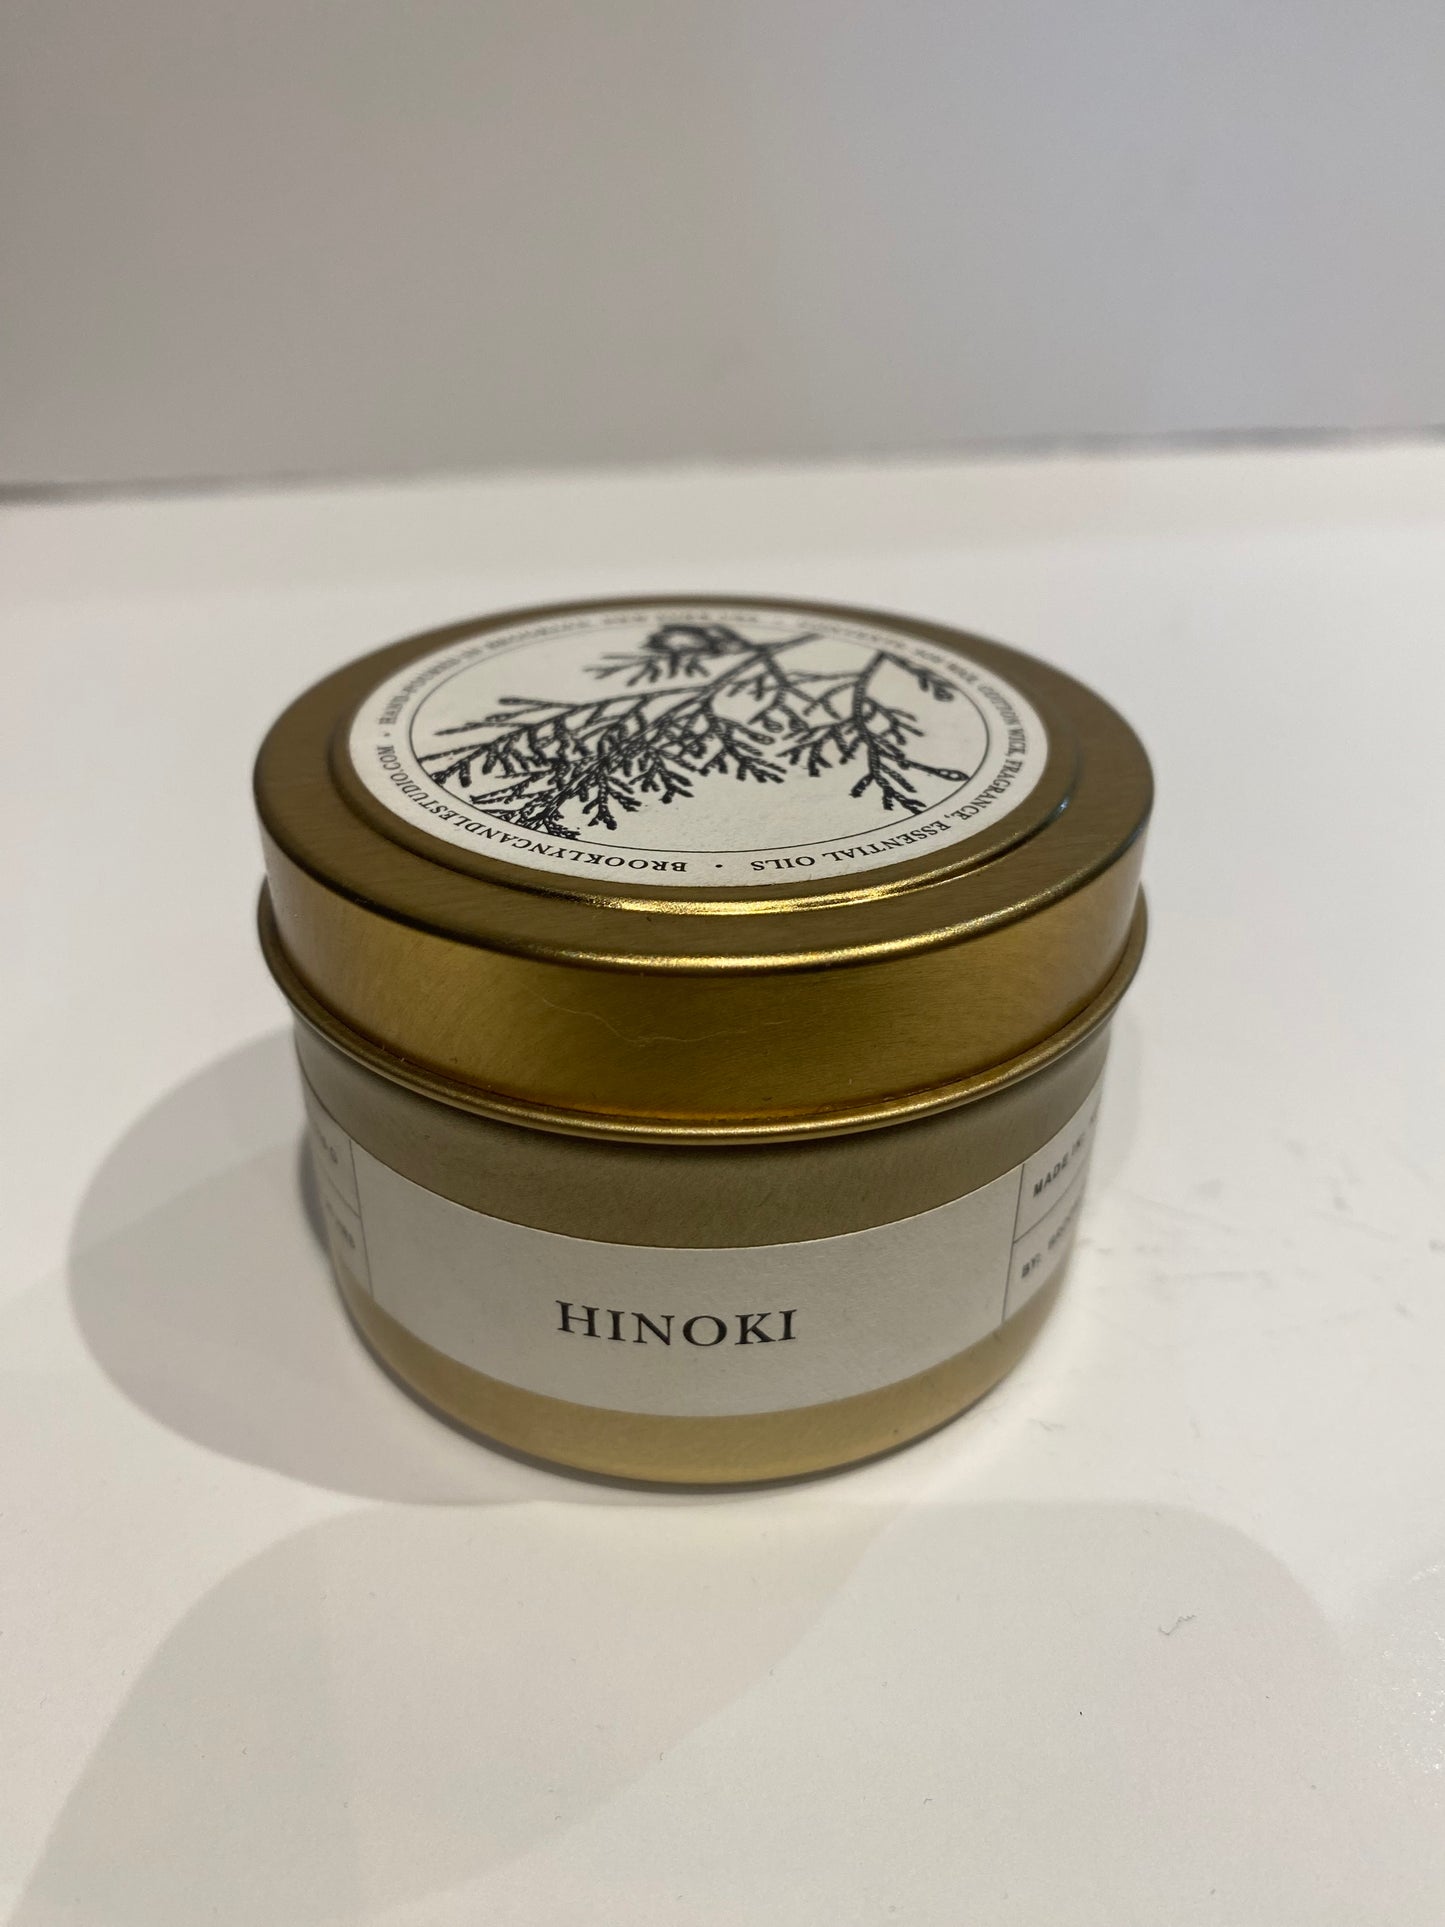 Hinoki Travel Tin Candle